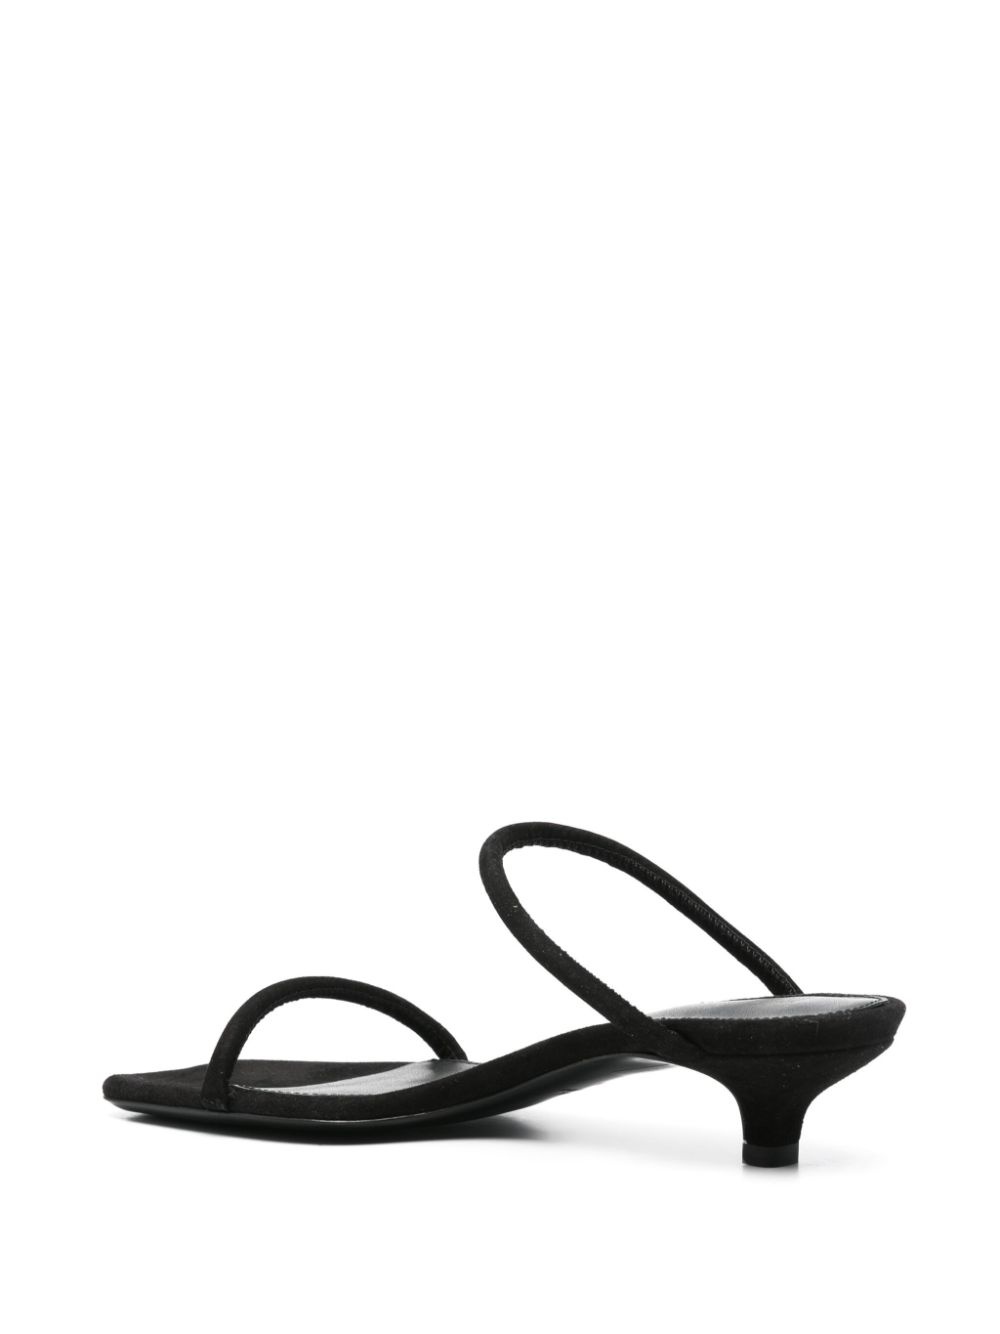 The minimalist leather sandals - 4